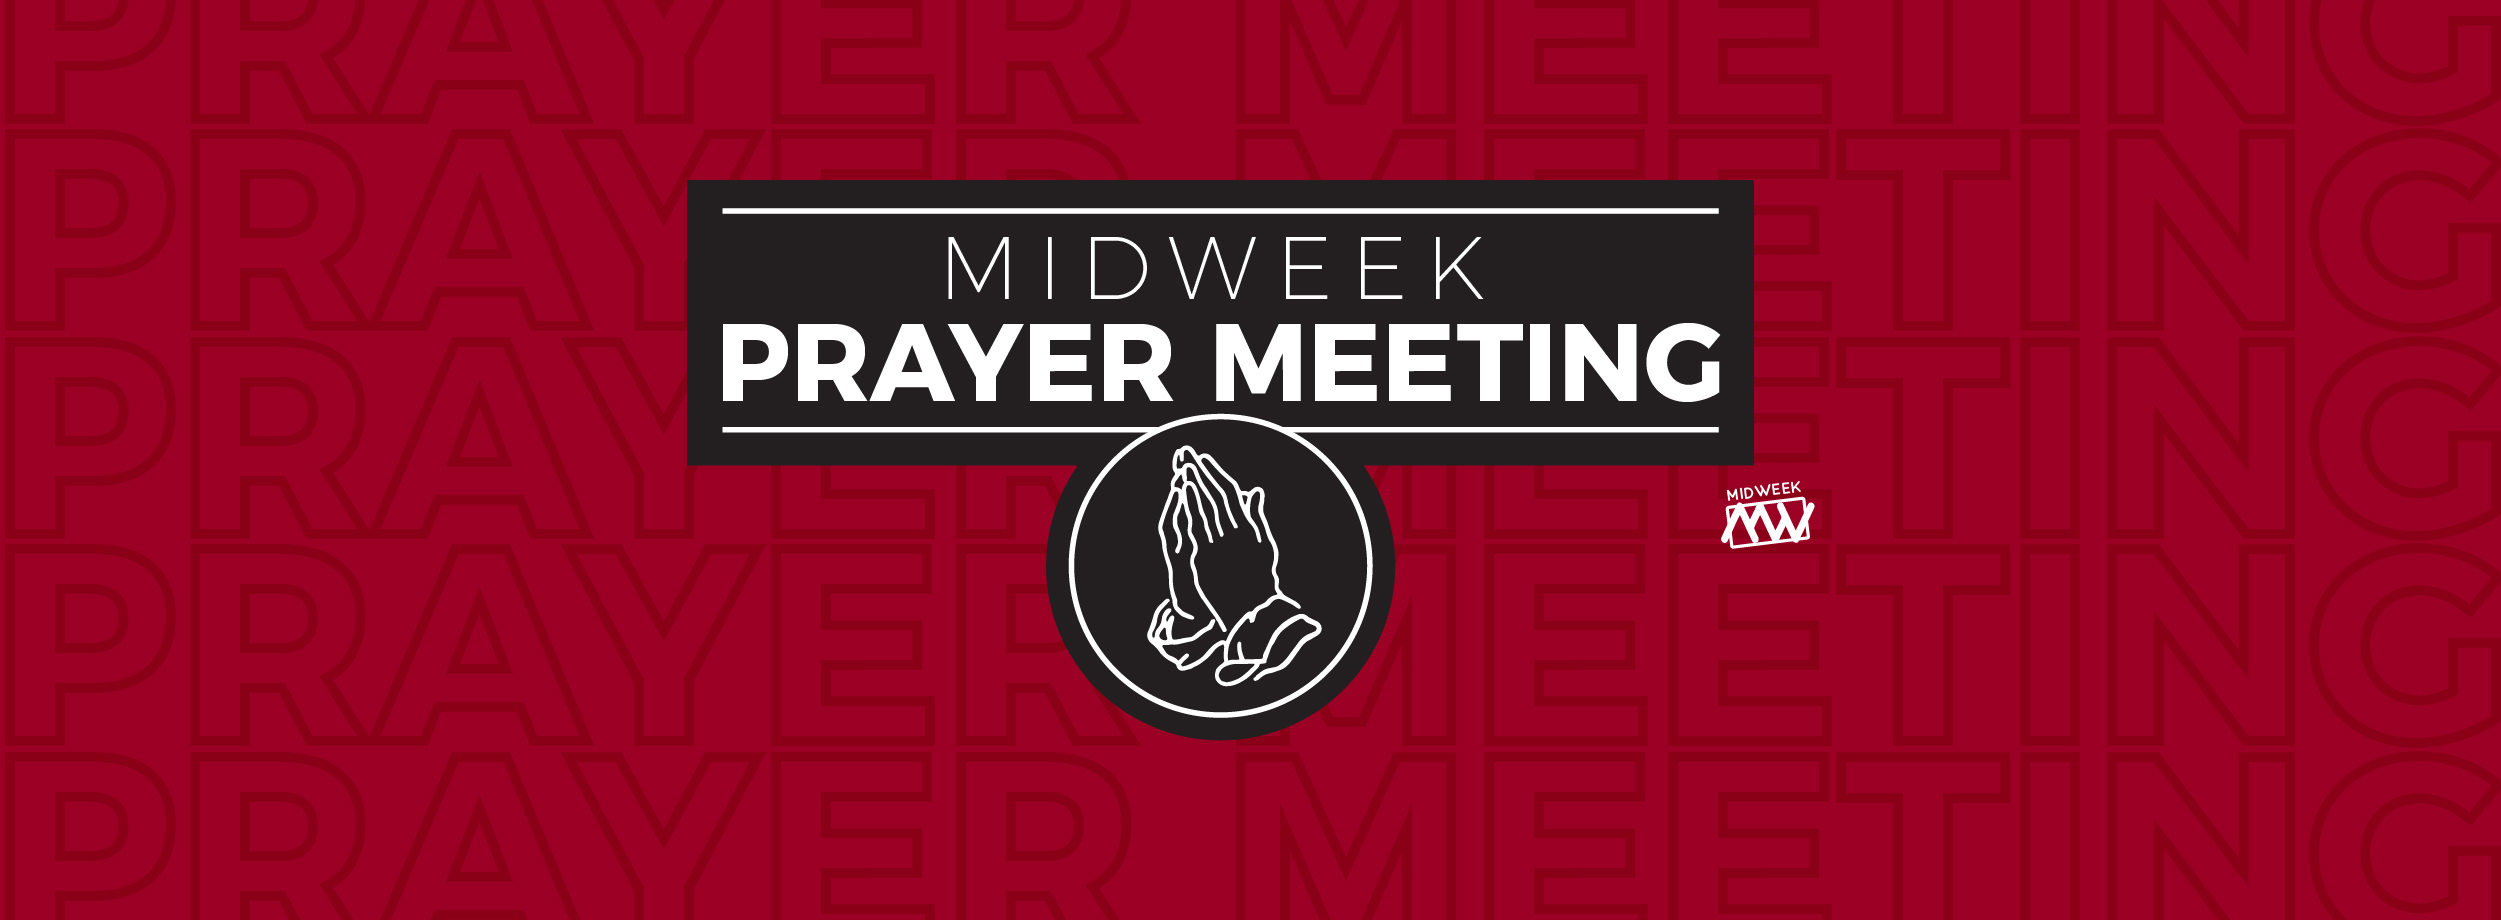 MidWeek Prayer Meeting First Baptist Church Olive Branch